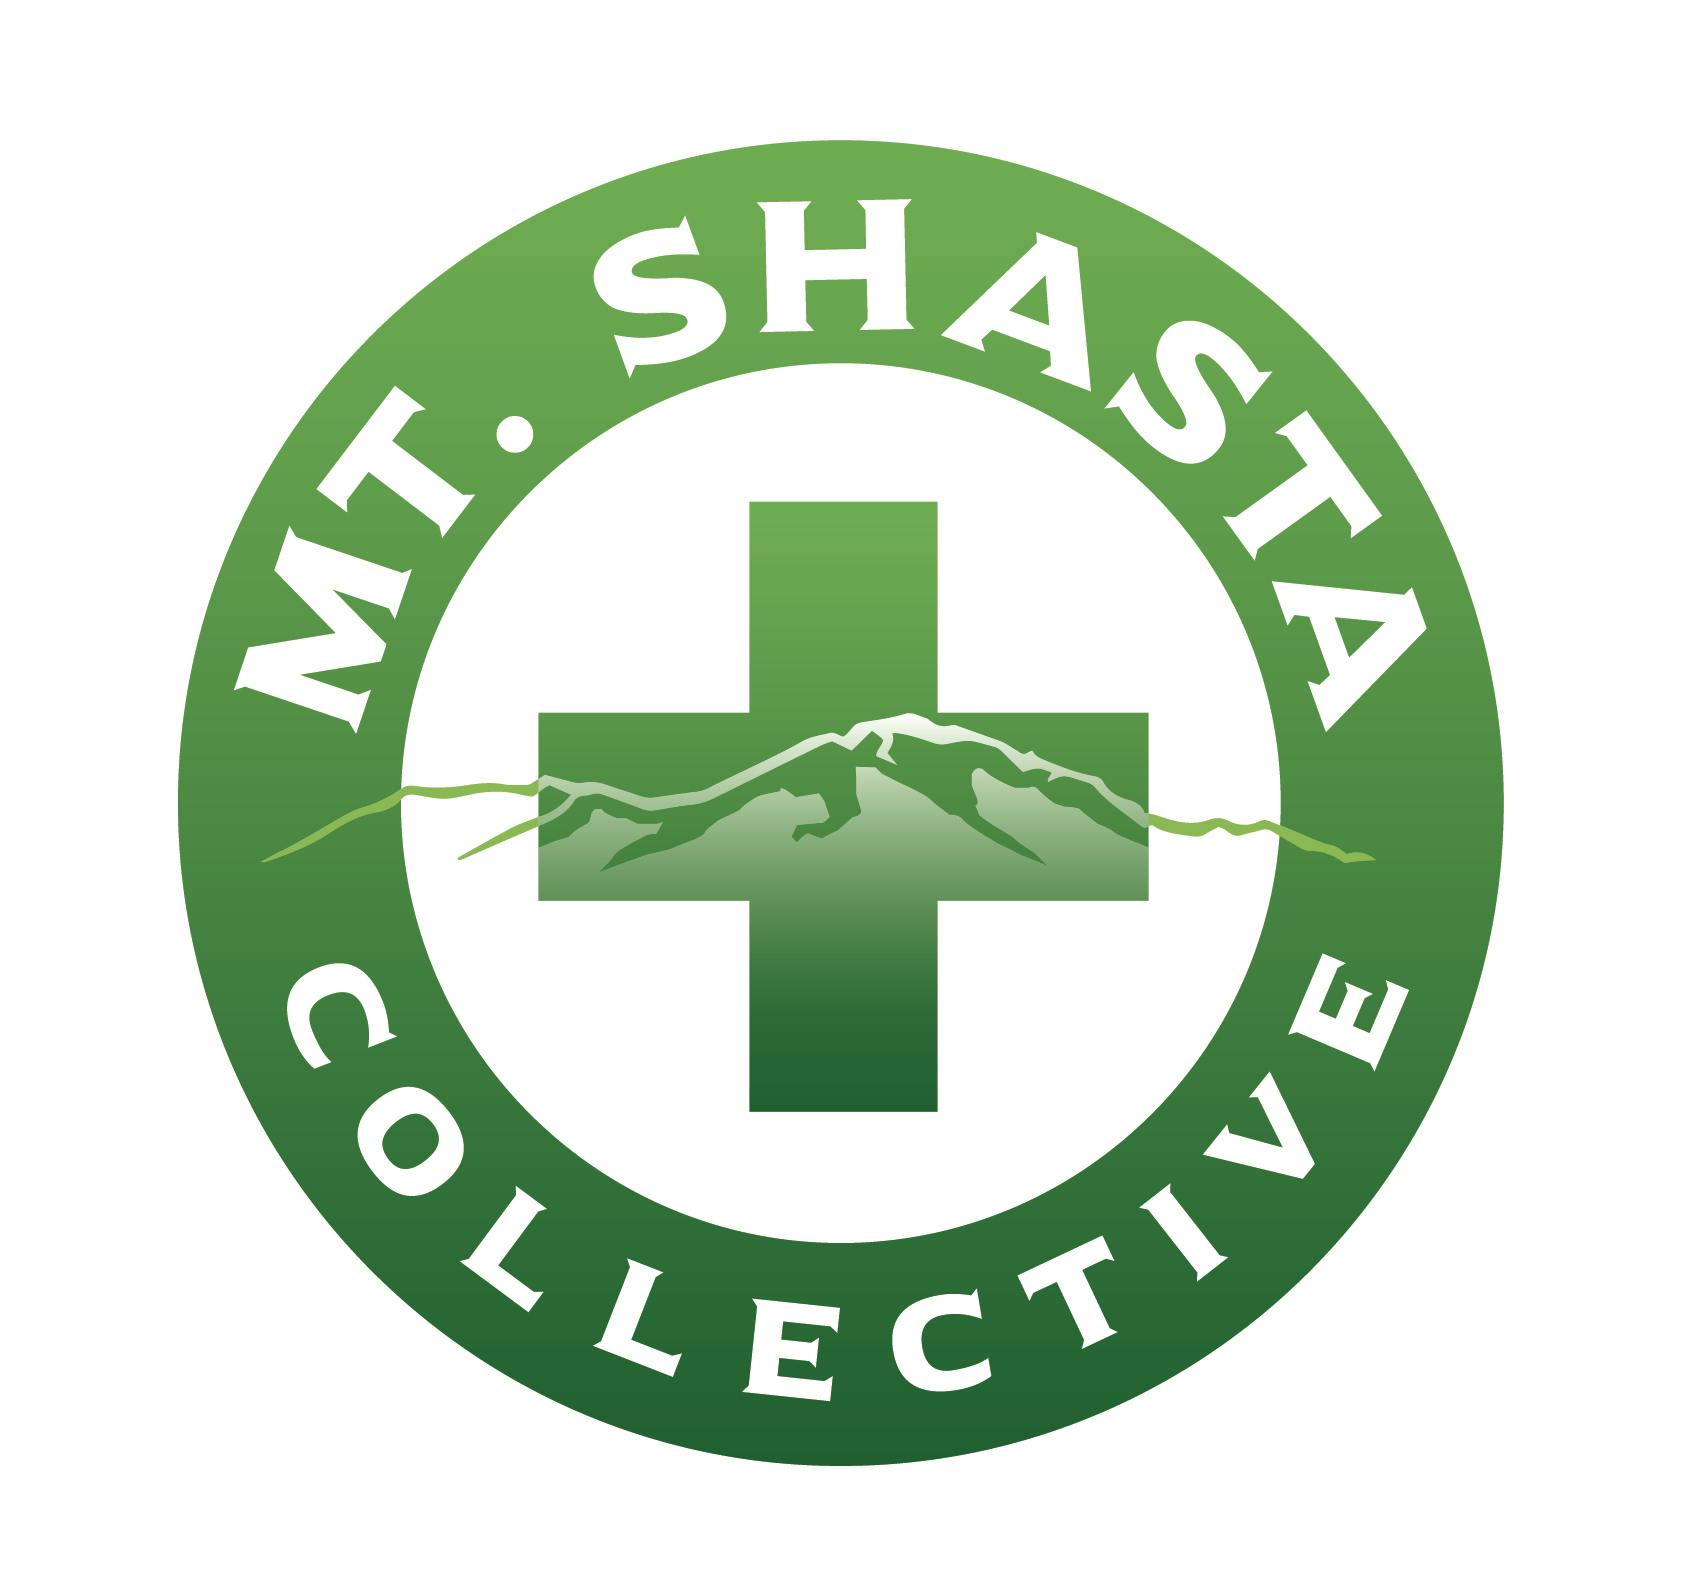 Hearts of Mt. Shasta-logo